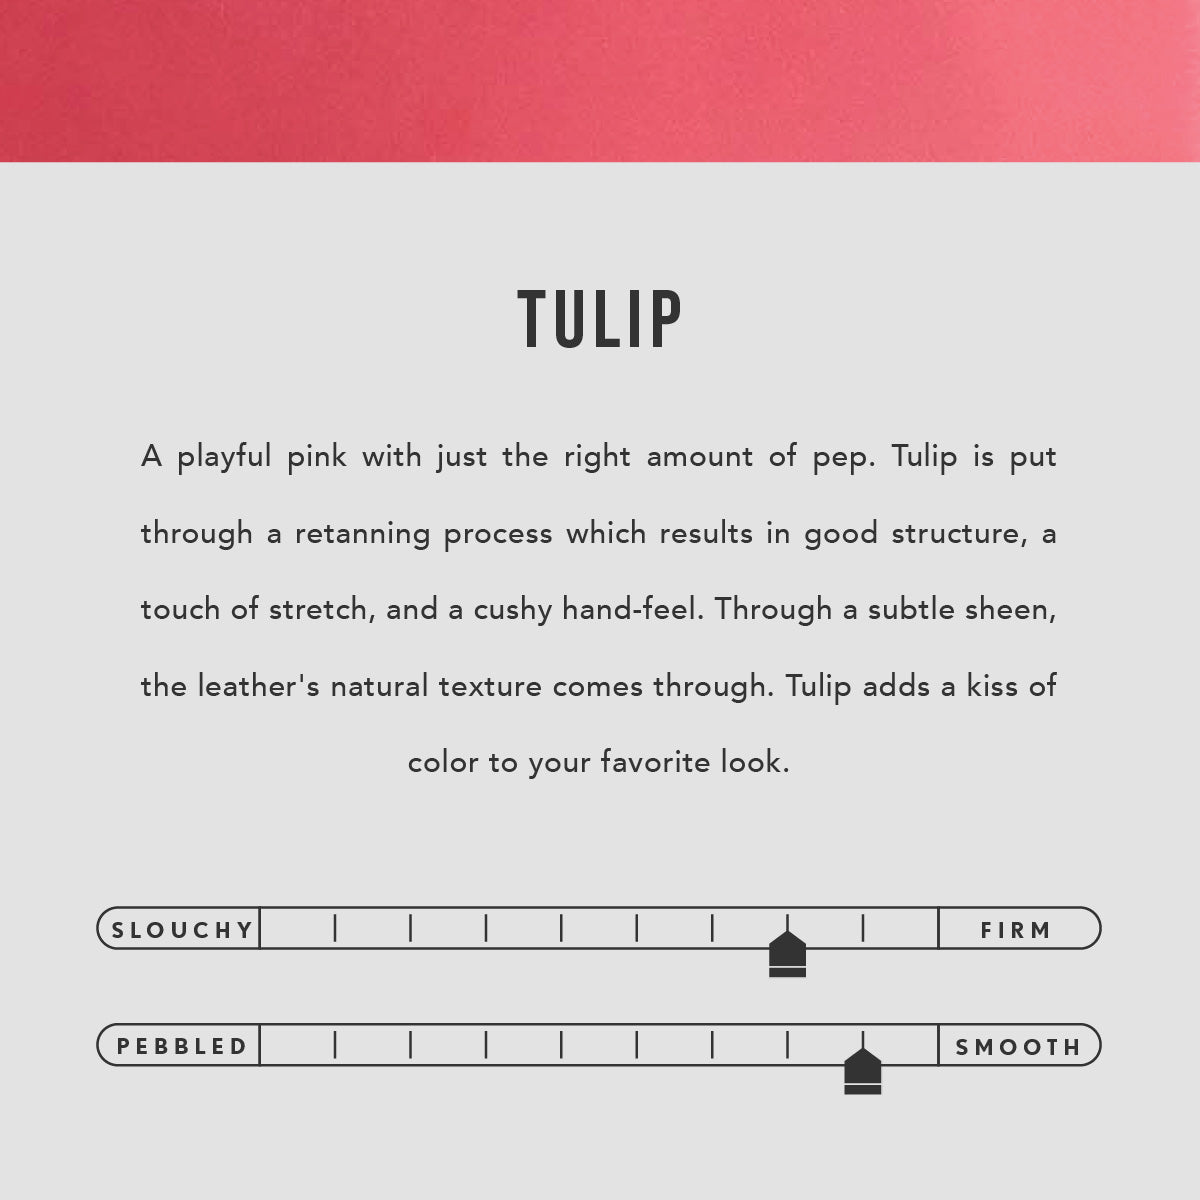 Tulip | infographic